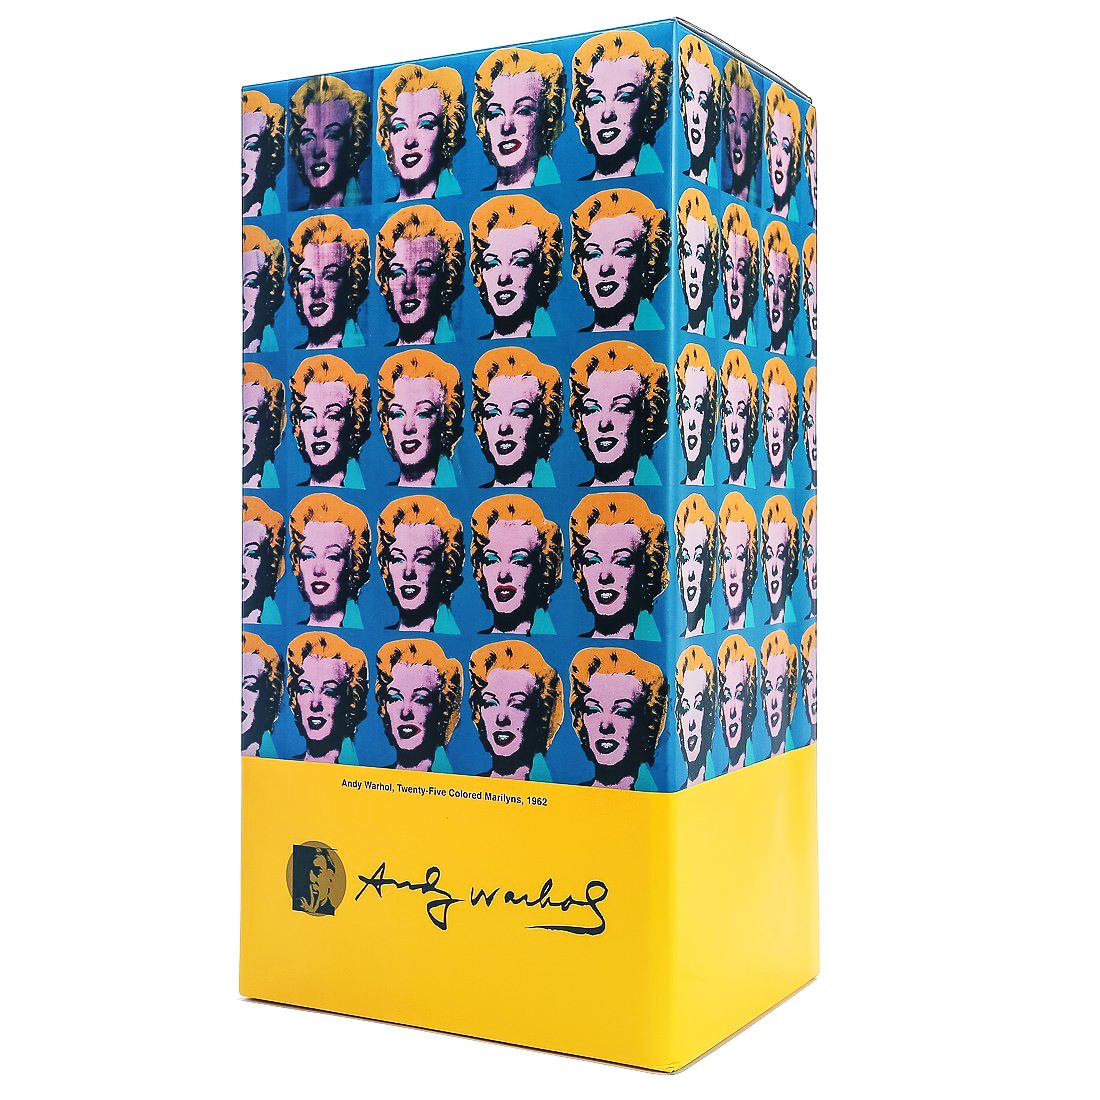 BEARBRICK ANDY WARHOL MARILYN 400% & 100% Medicom Toy Japan Vinyl figure POP ART - Gray Figurative Sculpture by (after) Andy Warhol